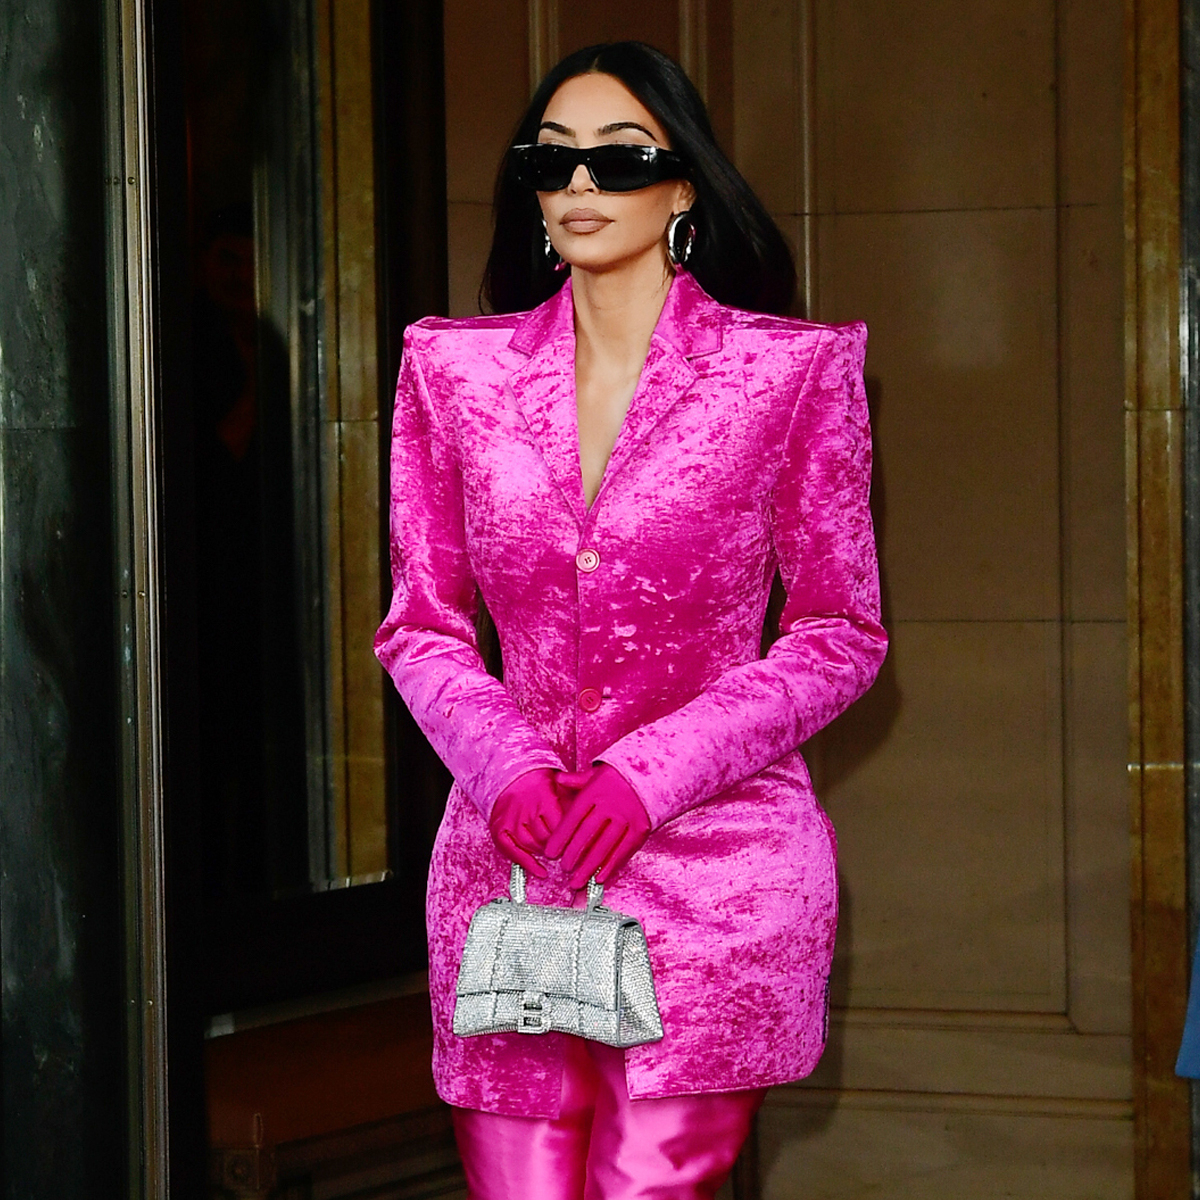 Photos from Kim Kardashian's New York City Style Ahead of SNL Debut